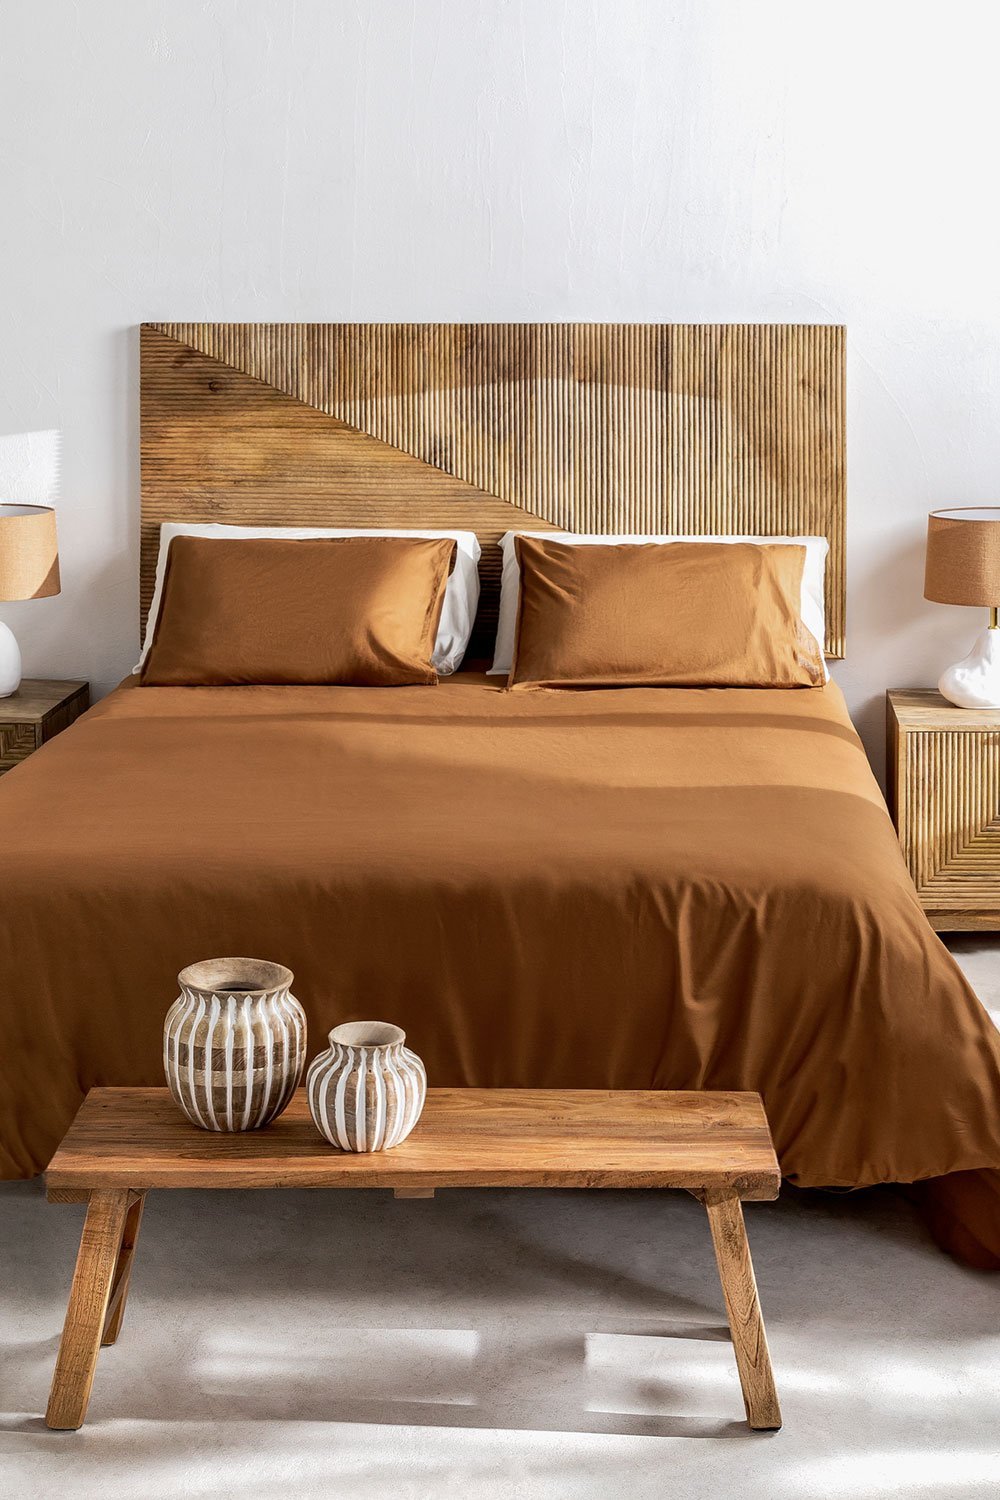 Baty Design mango wood headboard for 150cm bed, gallery image 1